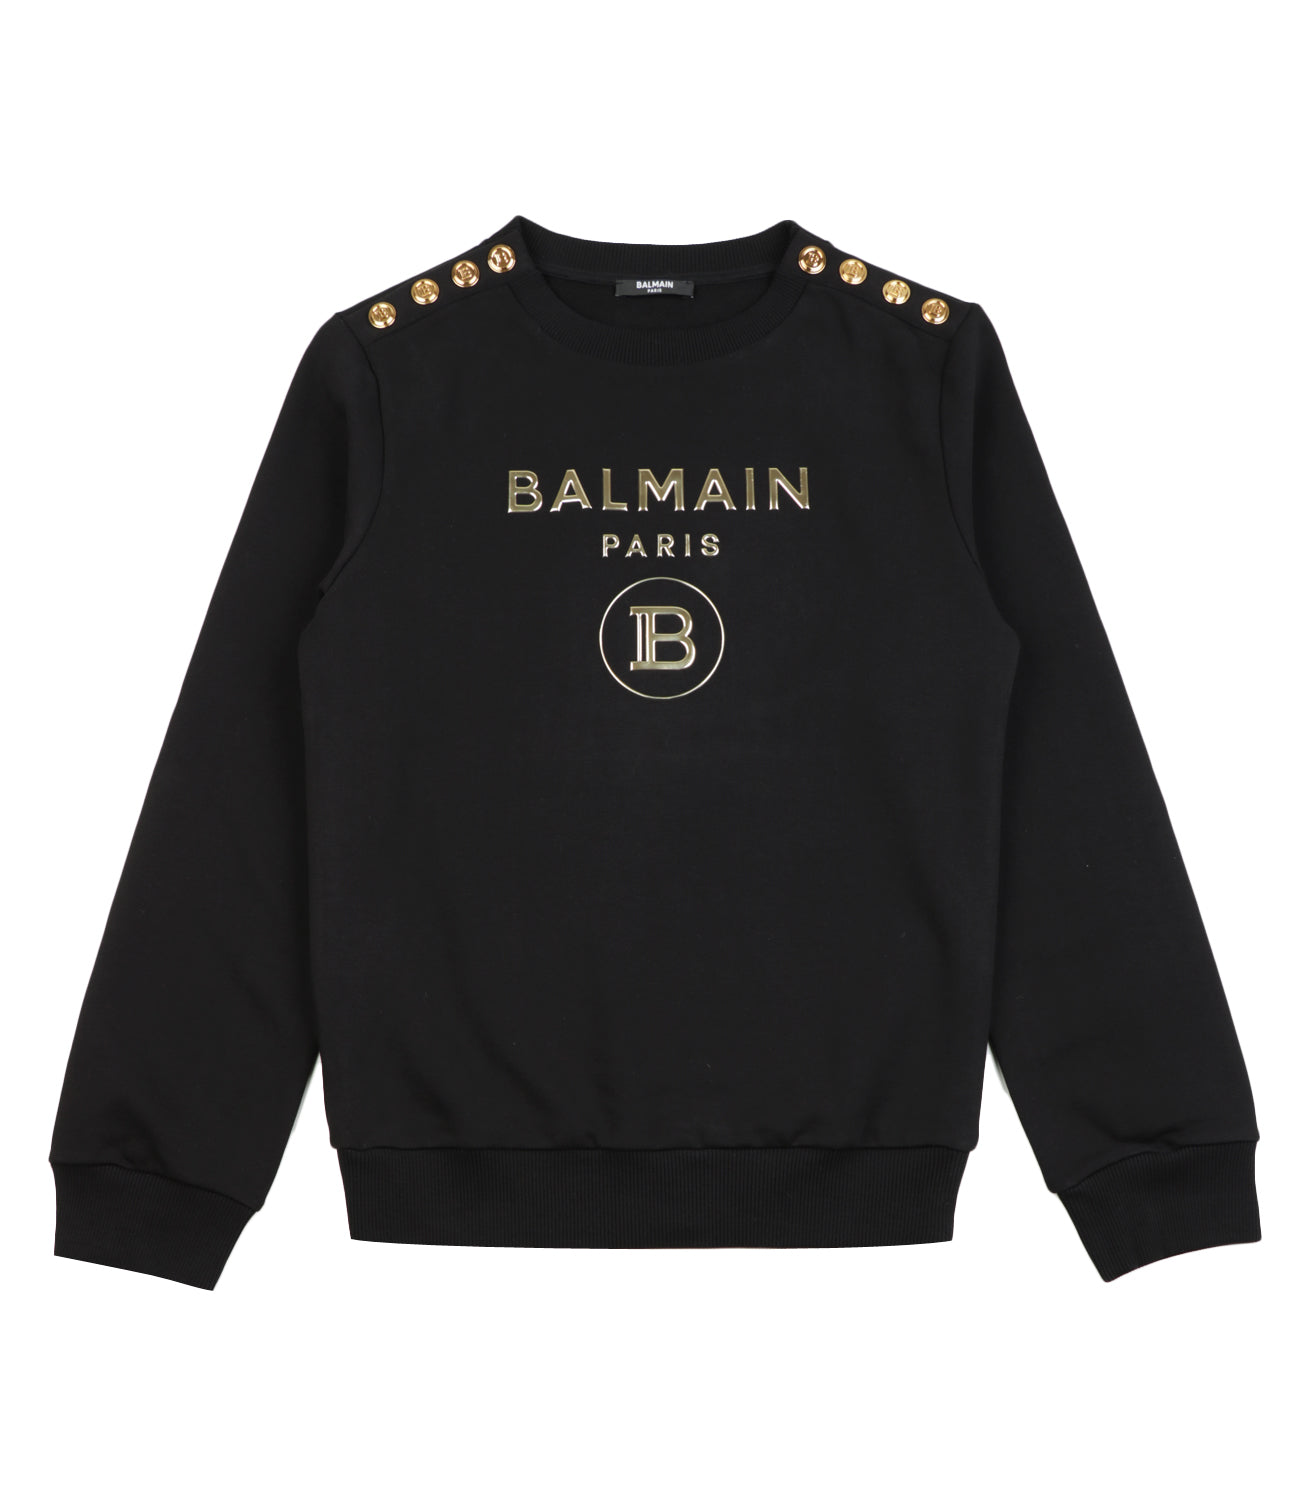 Balmain | Black and Gold Sweatshirt